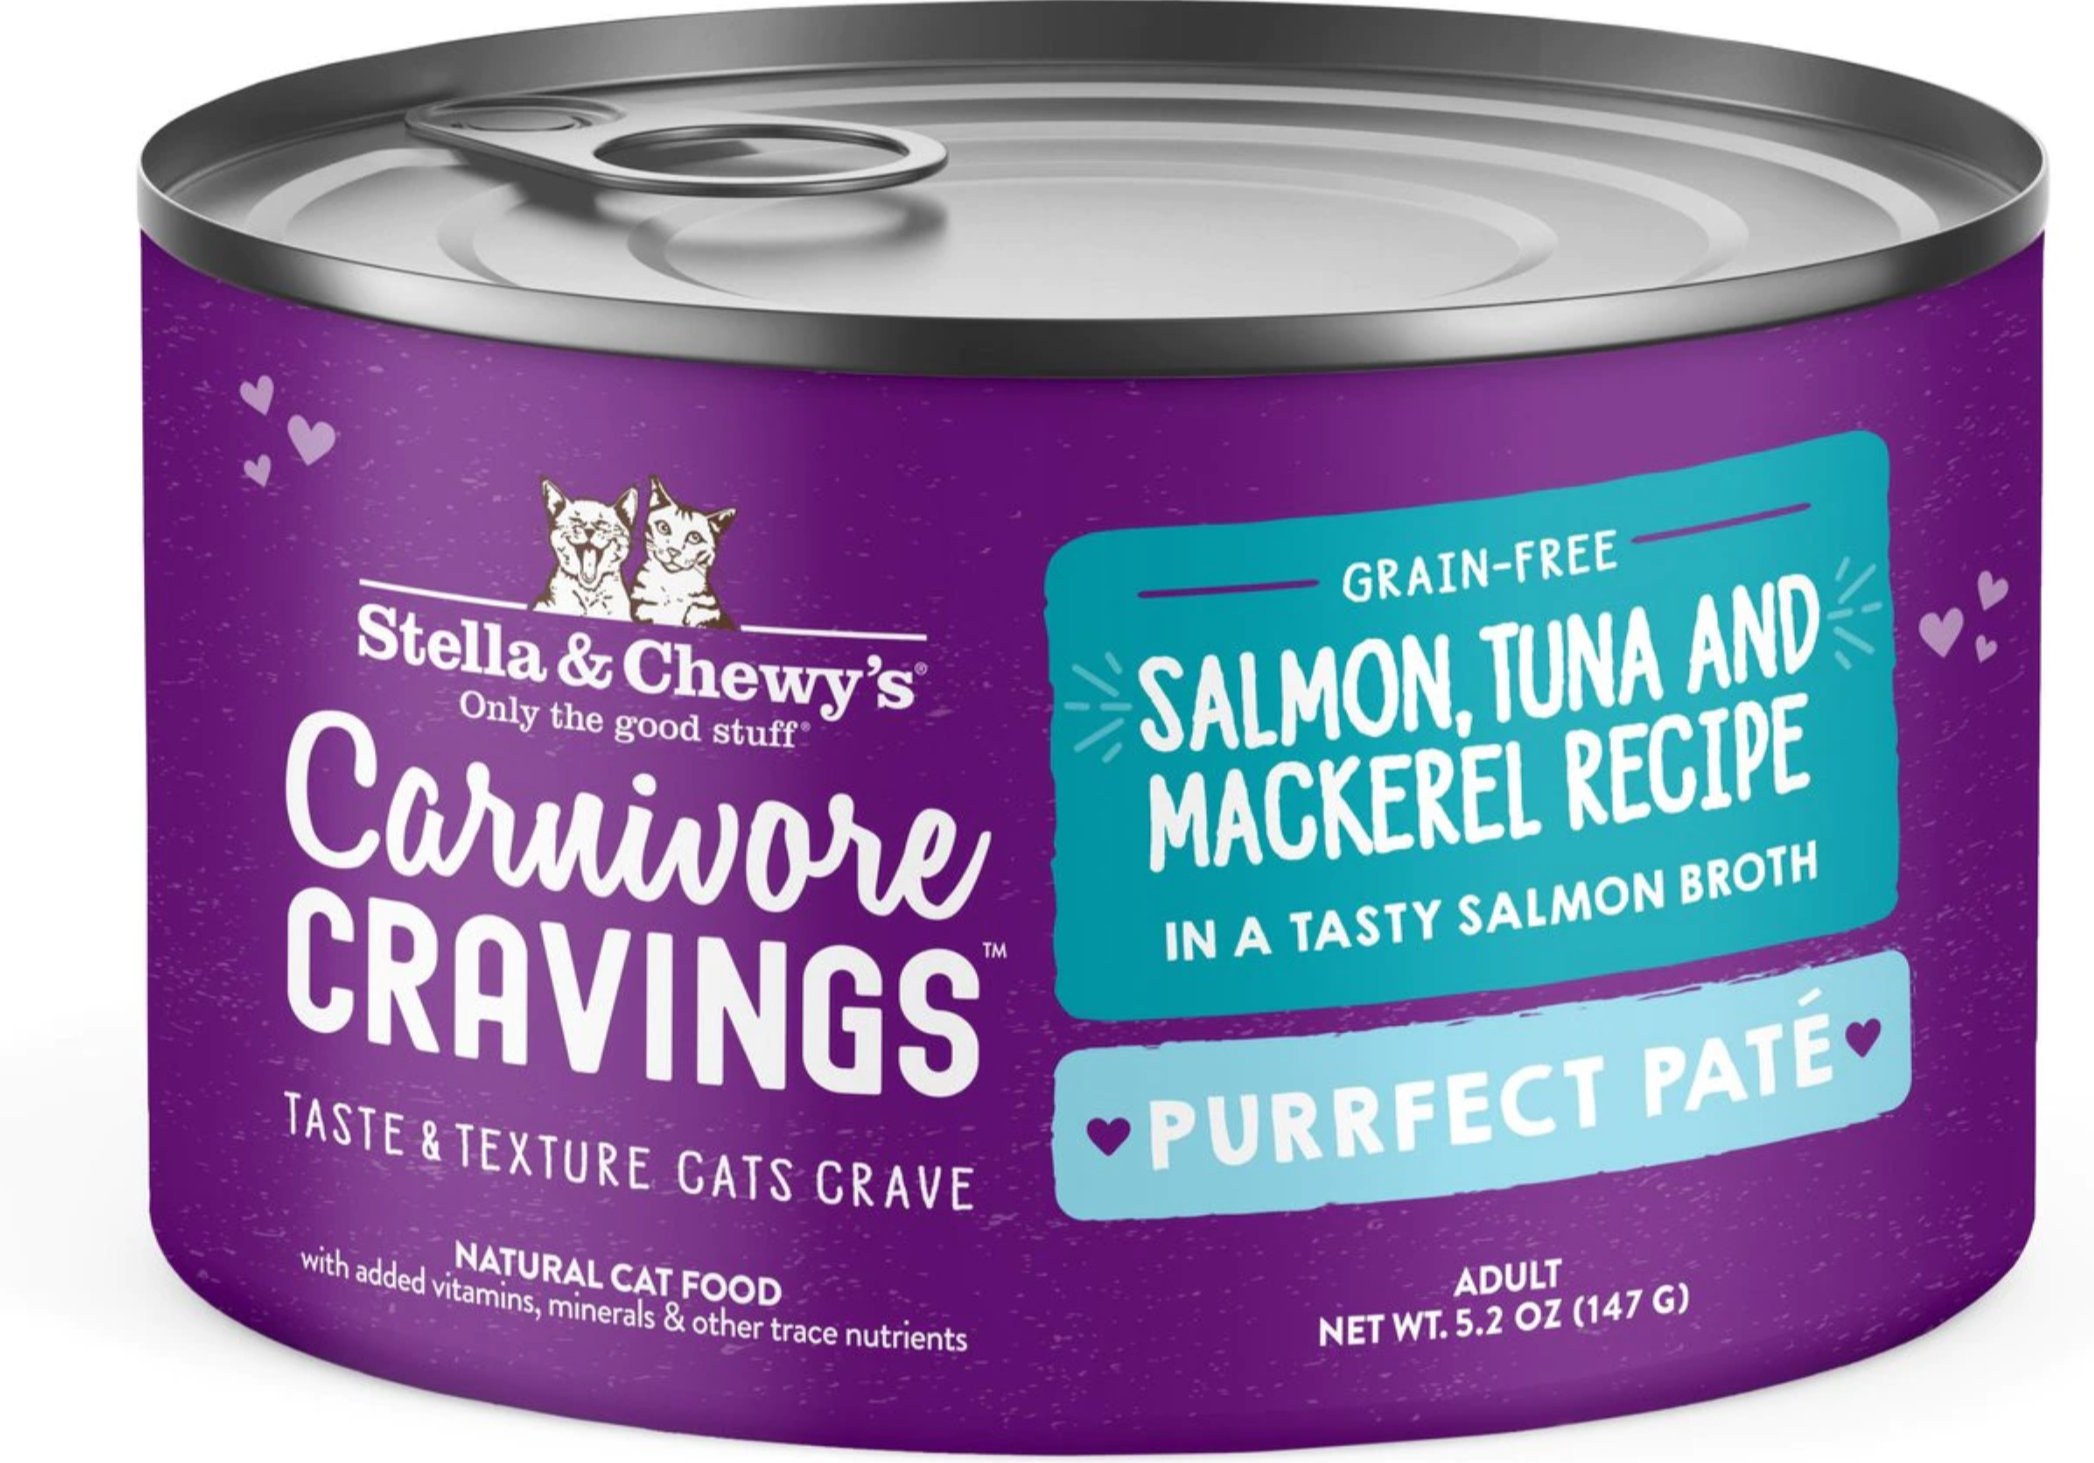 Stella & Chewy's Carnivore Cravings Purrfect Pate Salmon, Tuna & Mackerel Recipe - 5.2oz Can